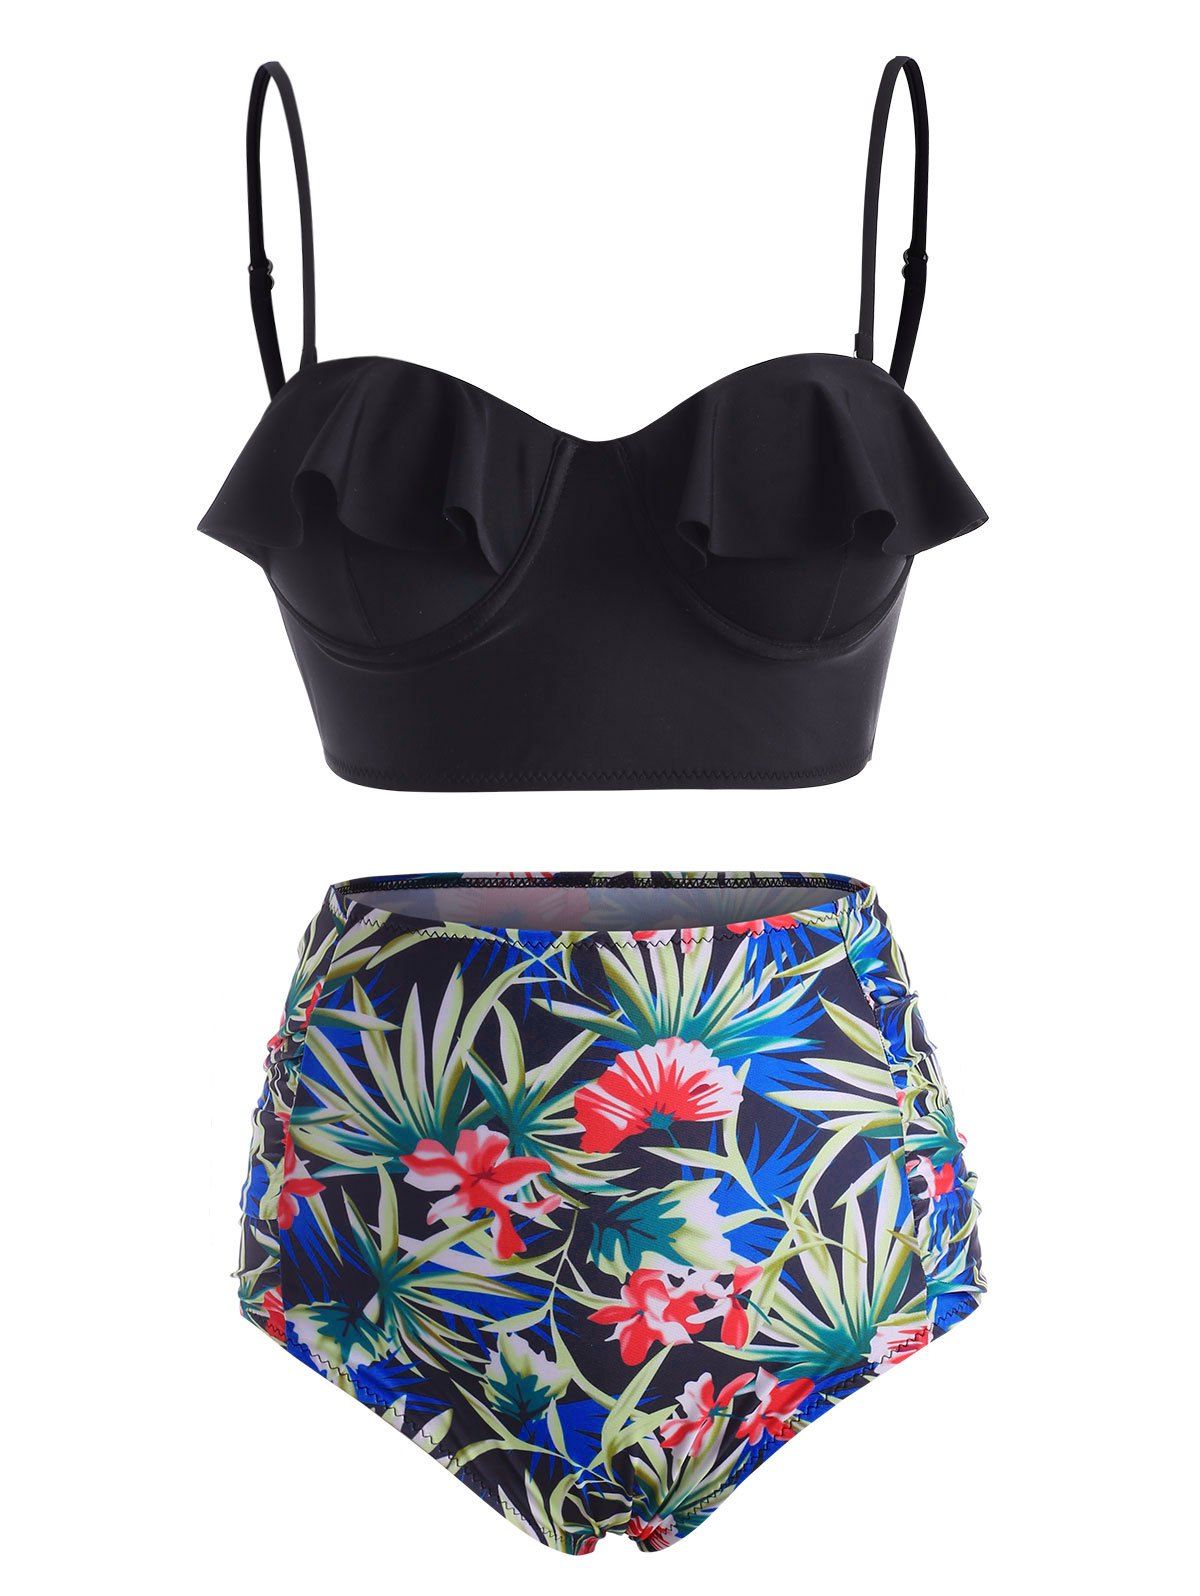 Ruffle Push Up Floral Leaf Ruched Tankini Swimwear - BLACK XL